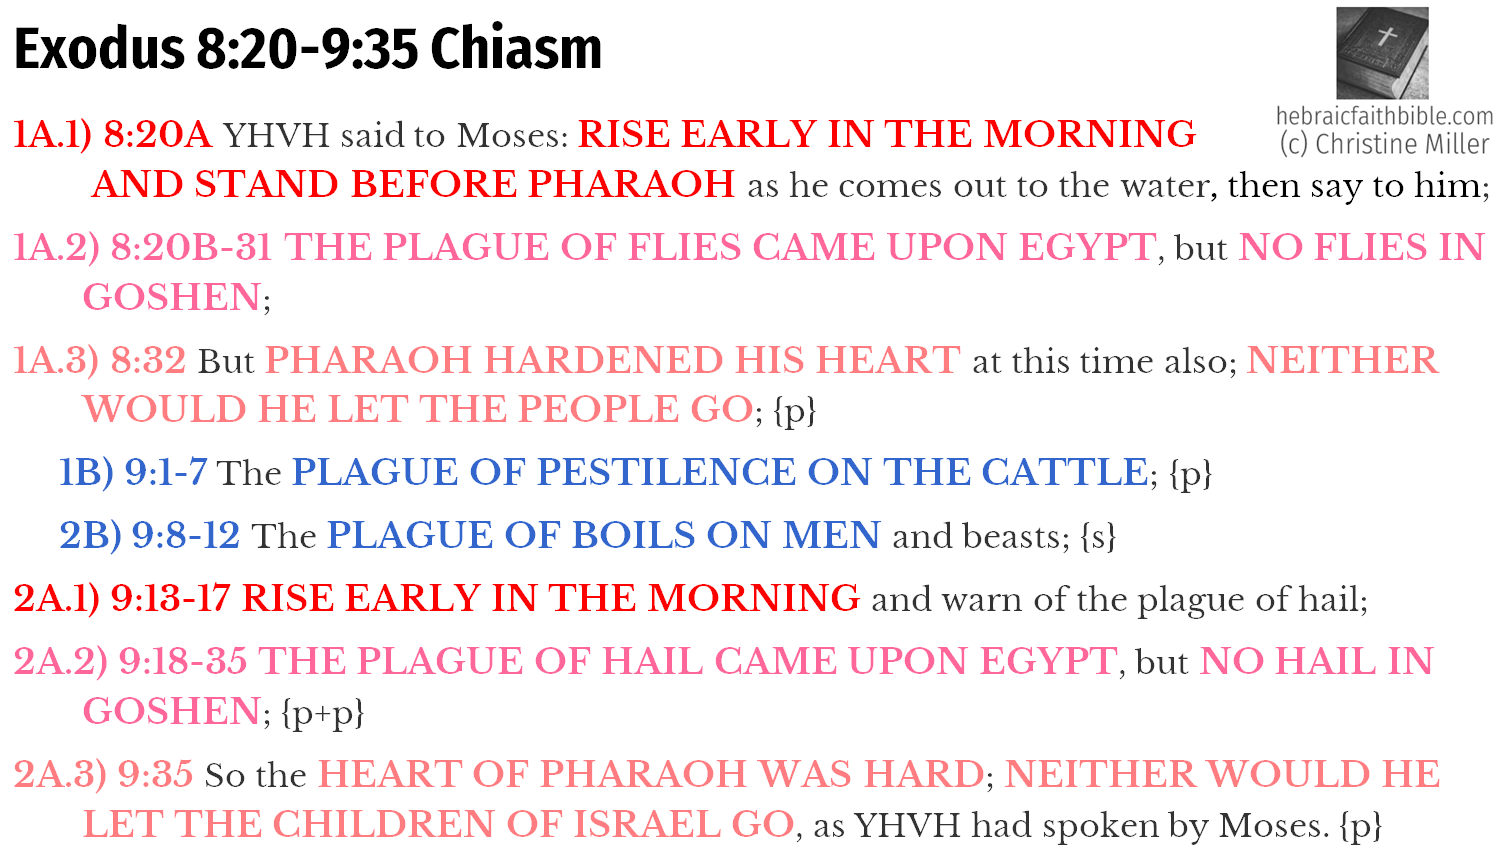 Exo 8:20-9:35 Chiasm | hebraicfaithbible.com